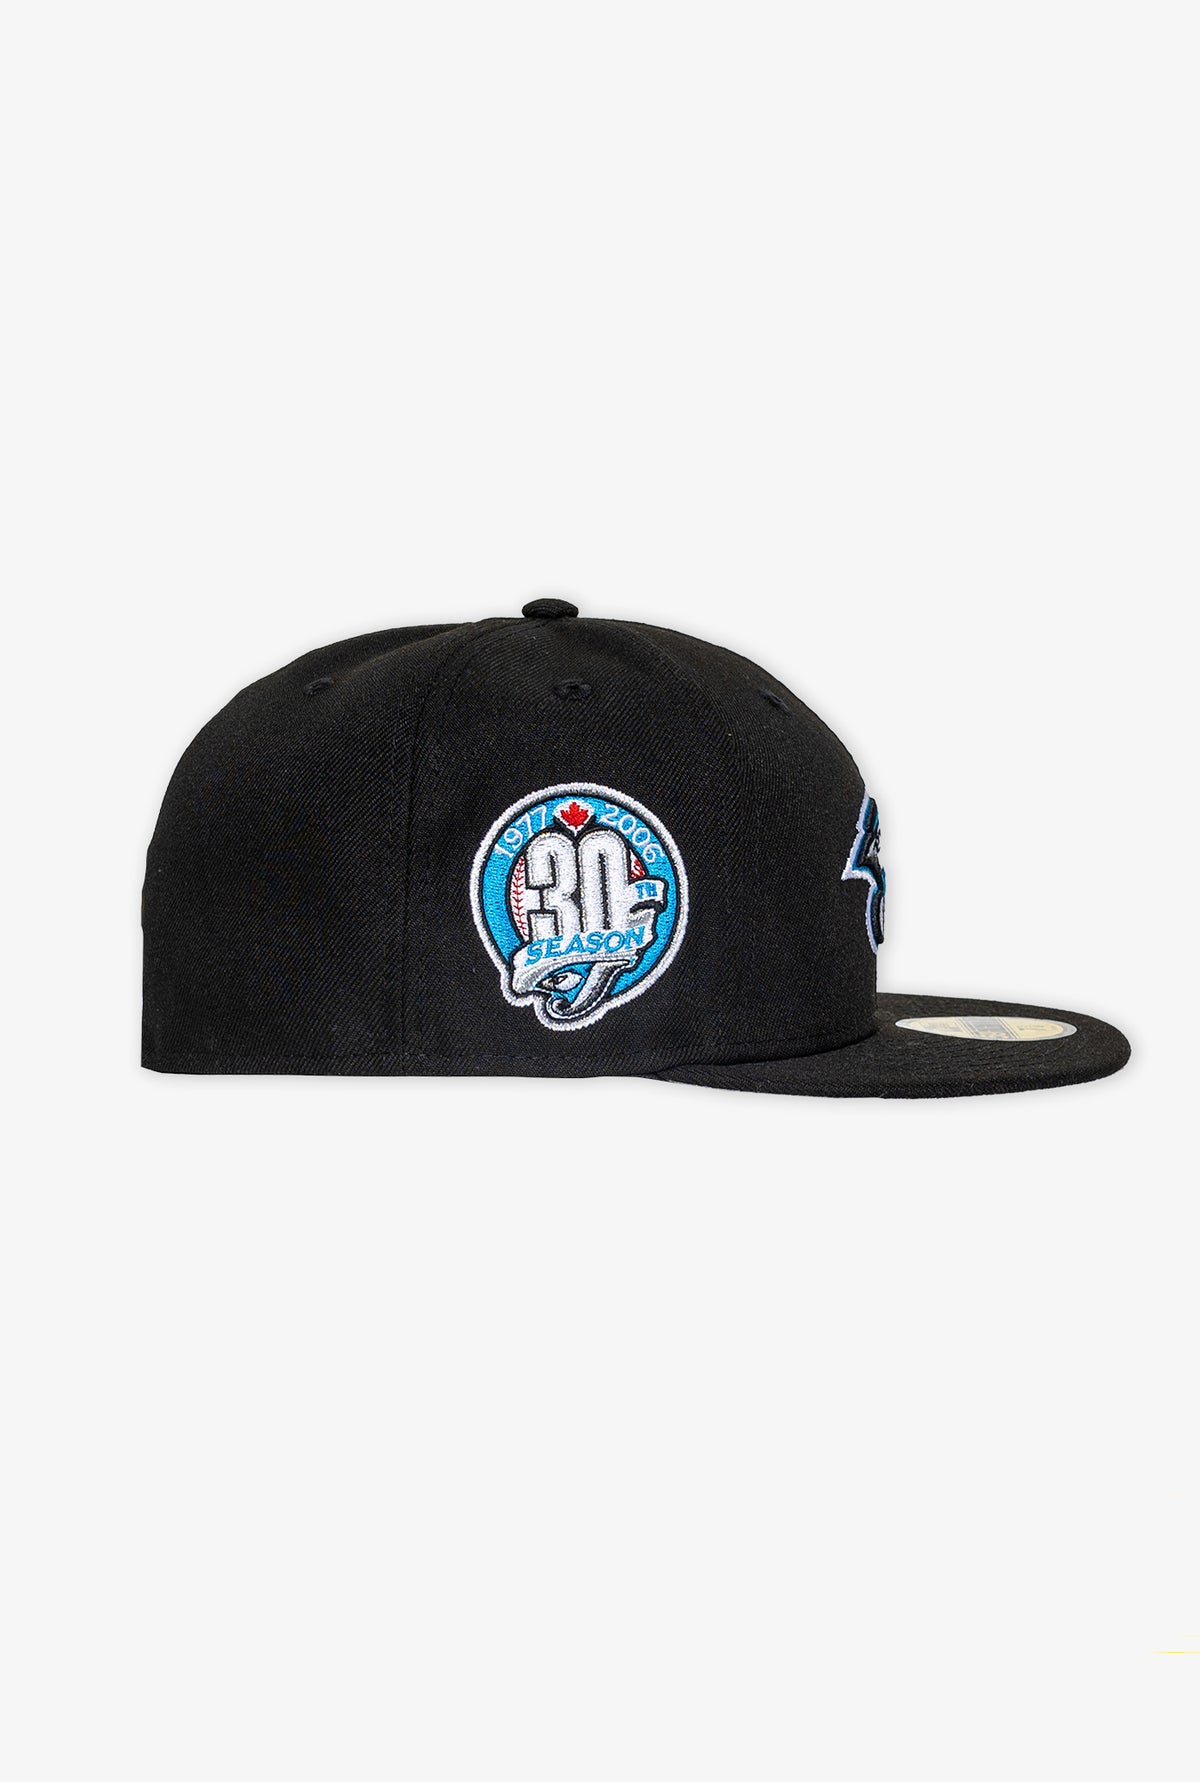 Toronto Blue Jays 30th Season 59FIFTY - Black